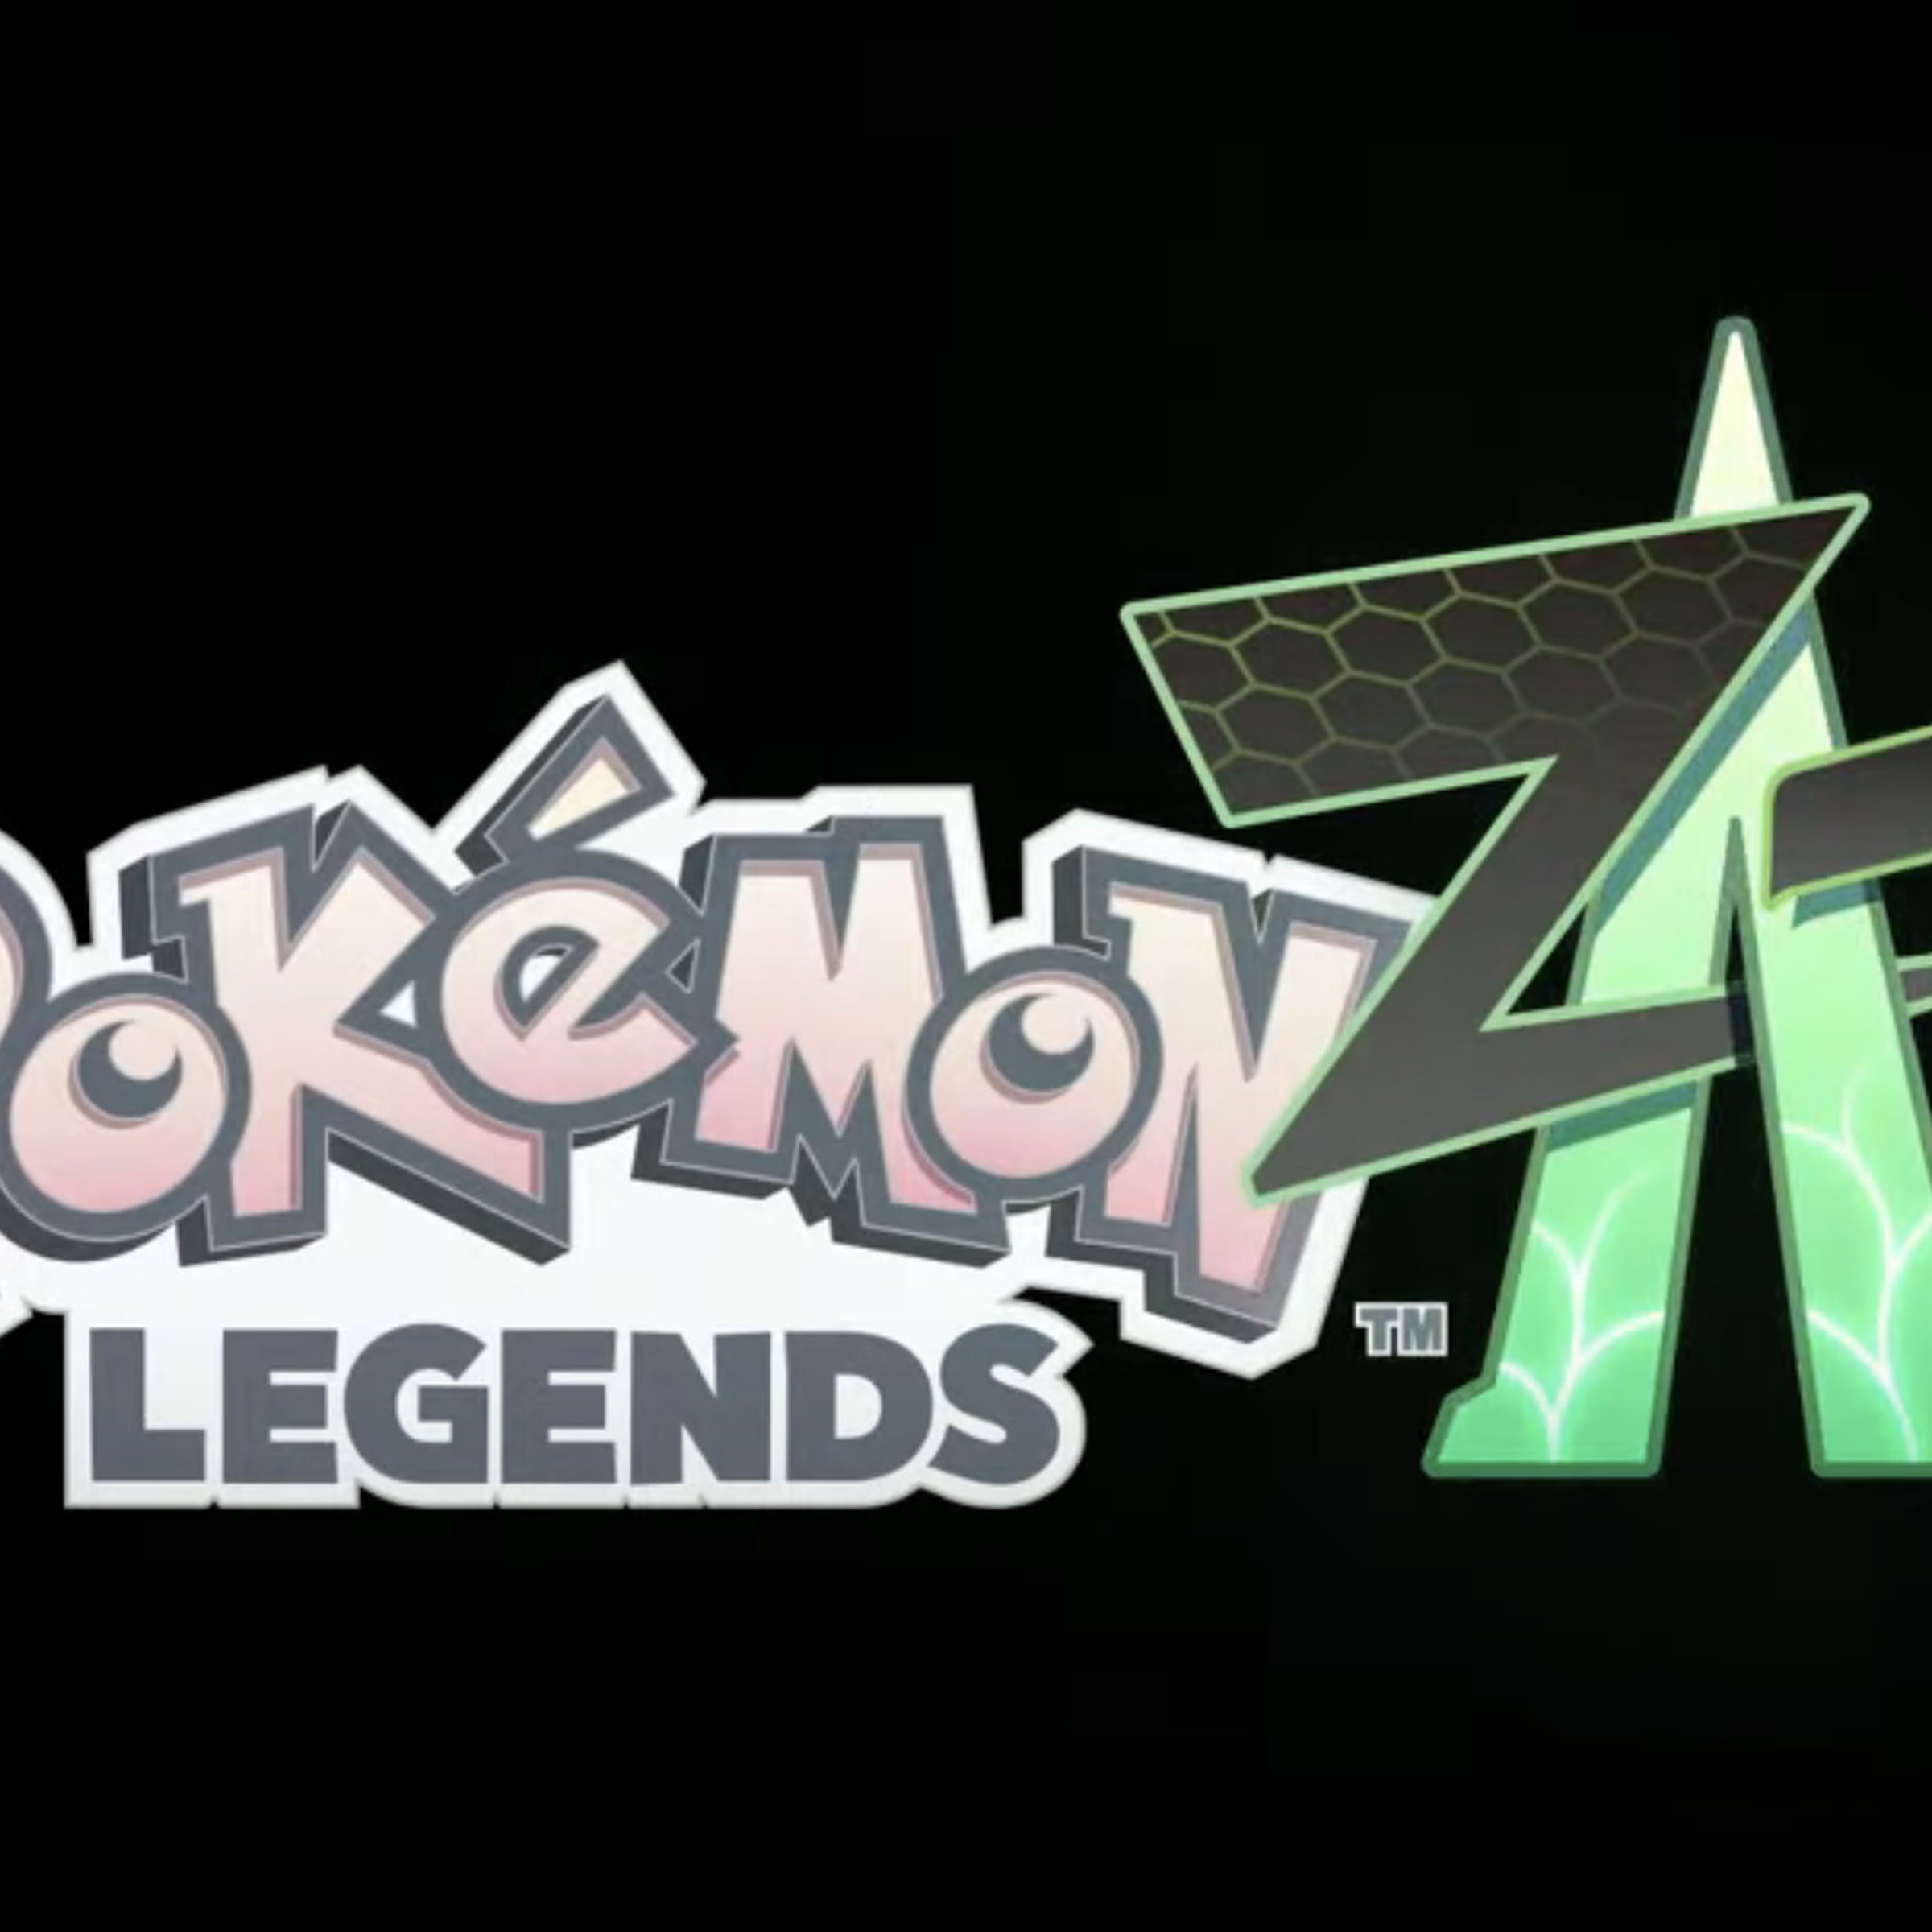 A logo for the new Pokémon Legends game.